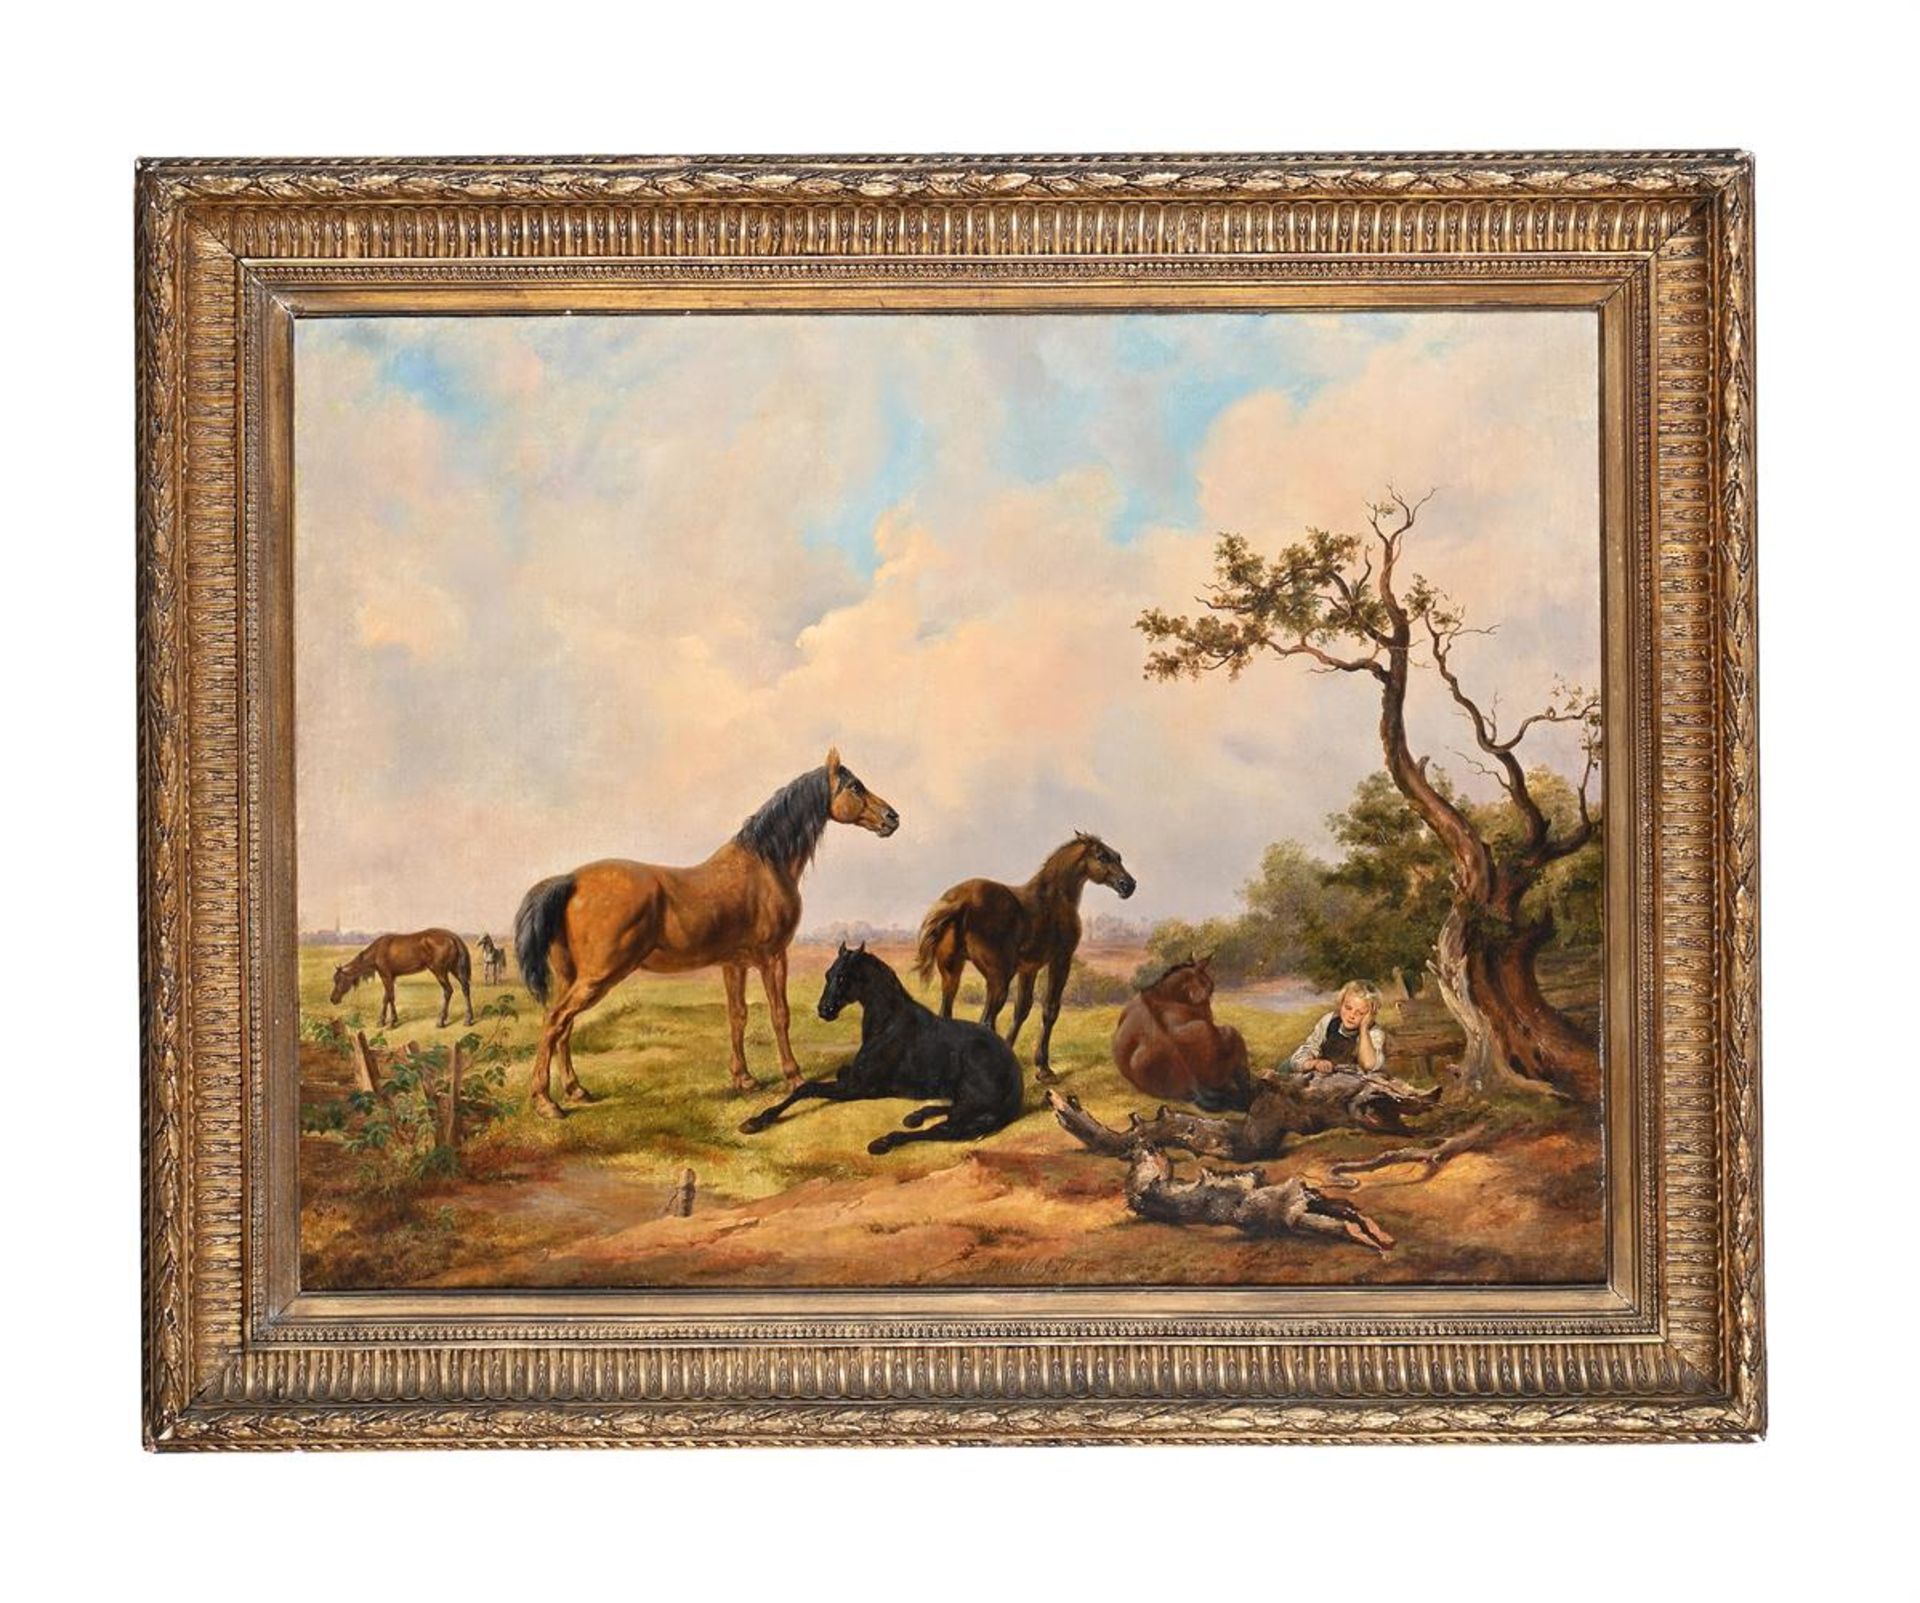 OTTO GRASHOF (GERMAN 1812 - 1876), HORSES IN A LANDSCAPE